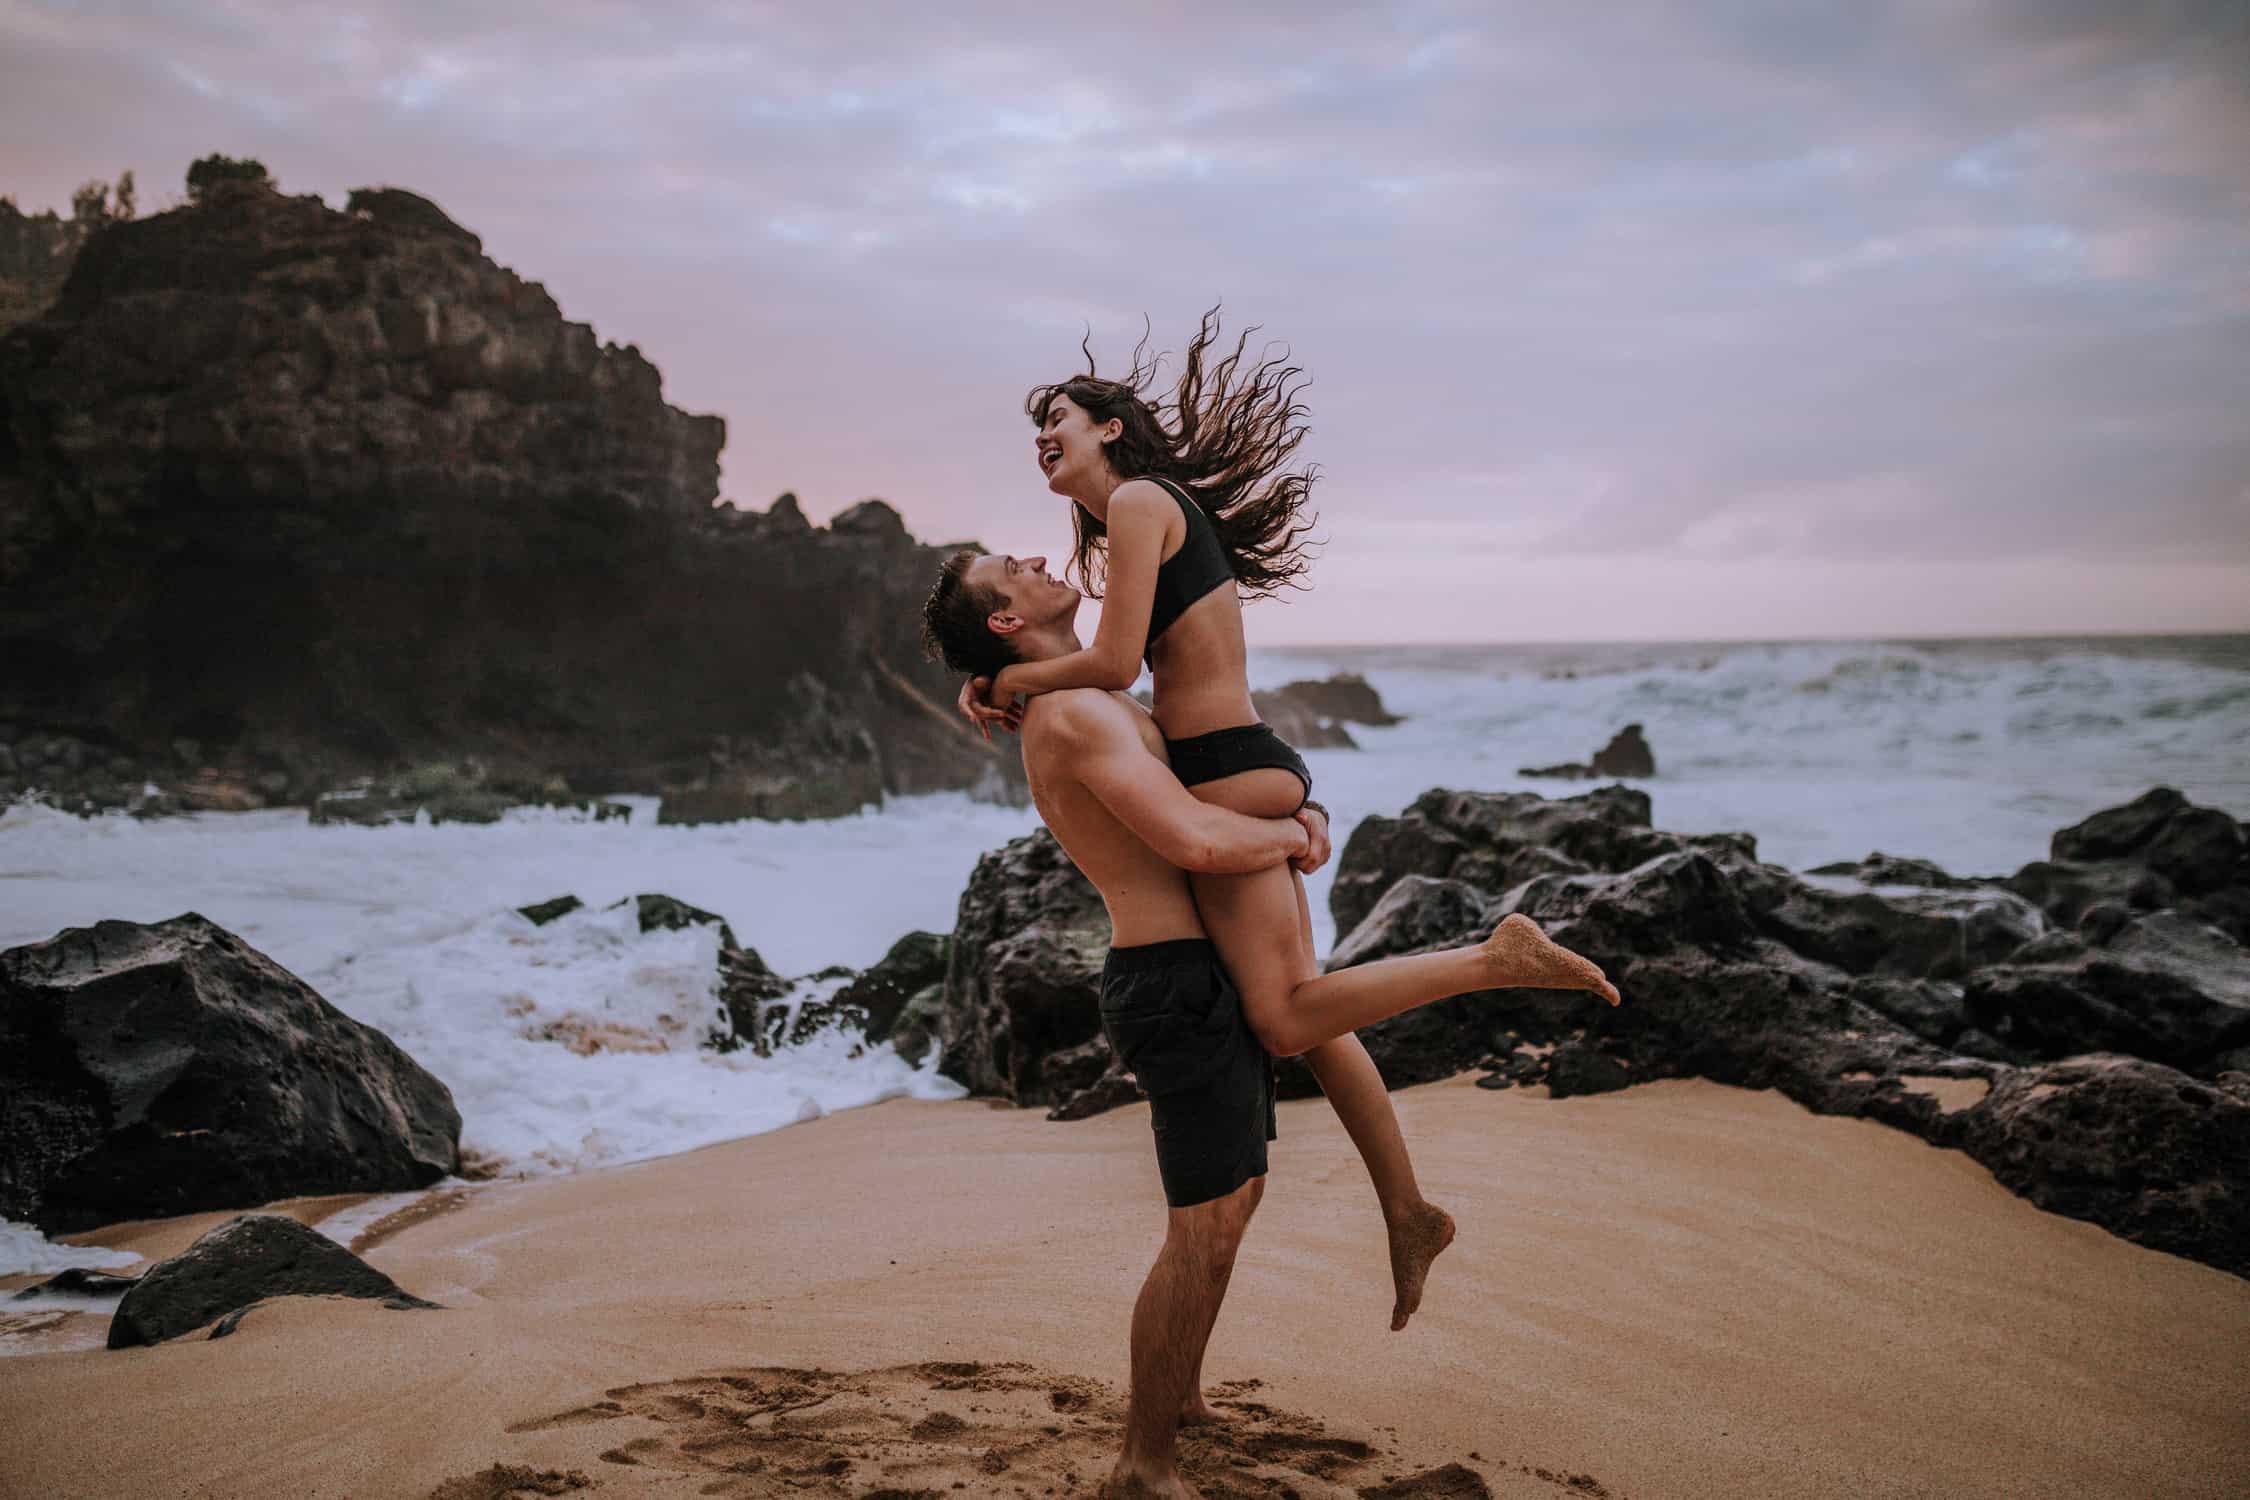 ENGAGEMENT/COUPLES PHOTOGRAPHER ON OAHU, HAWAII